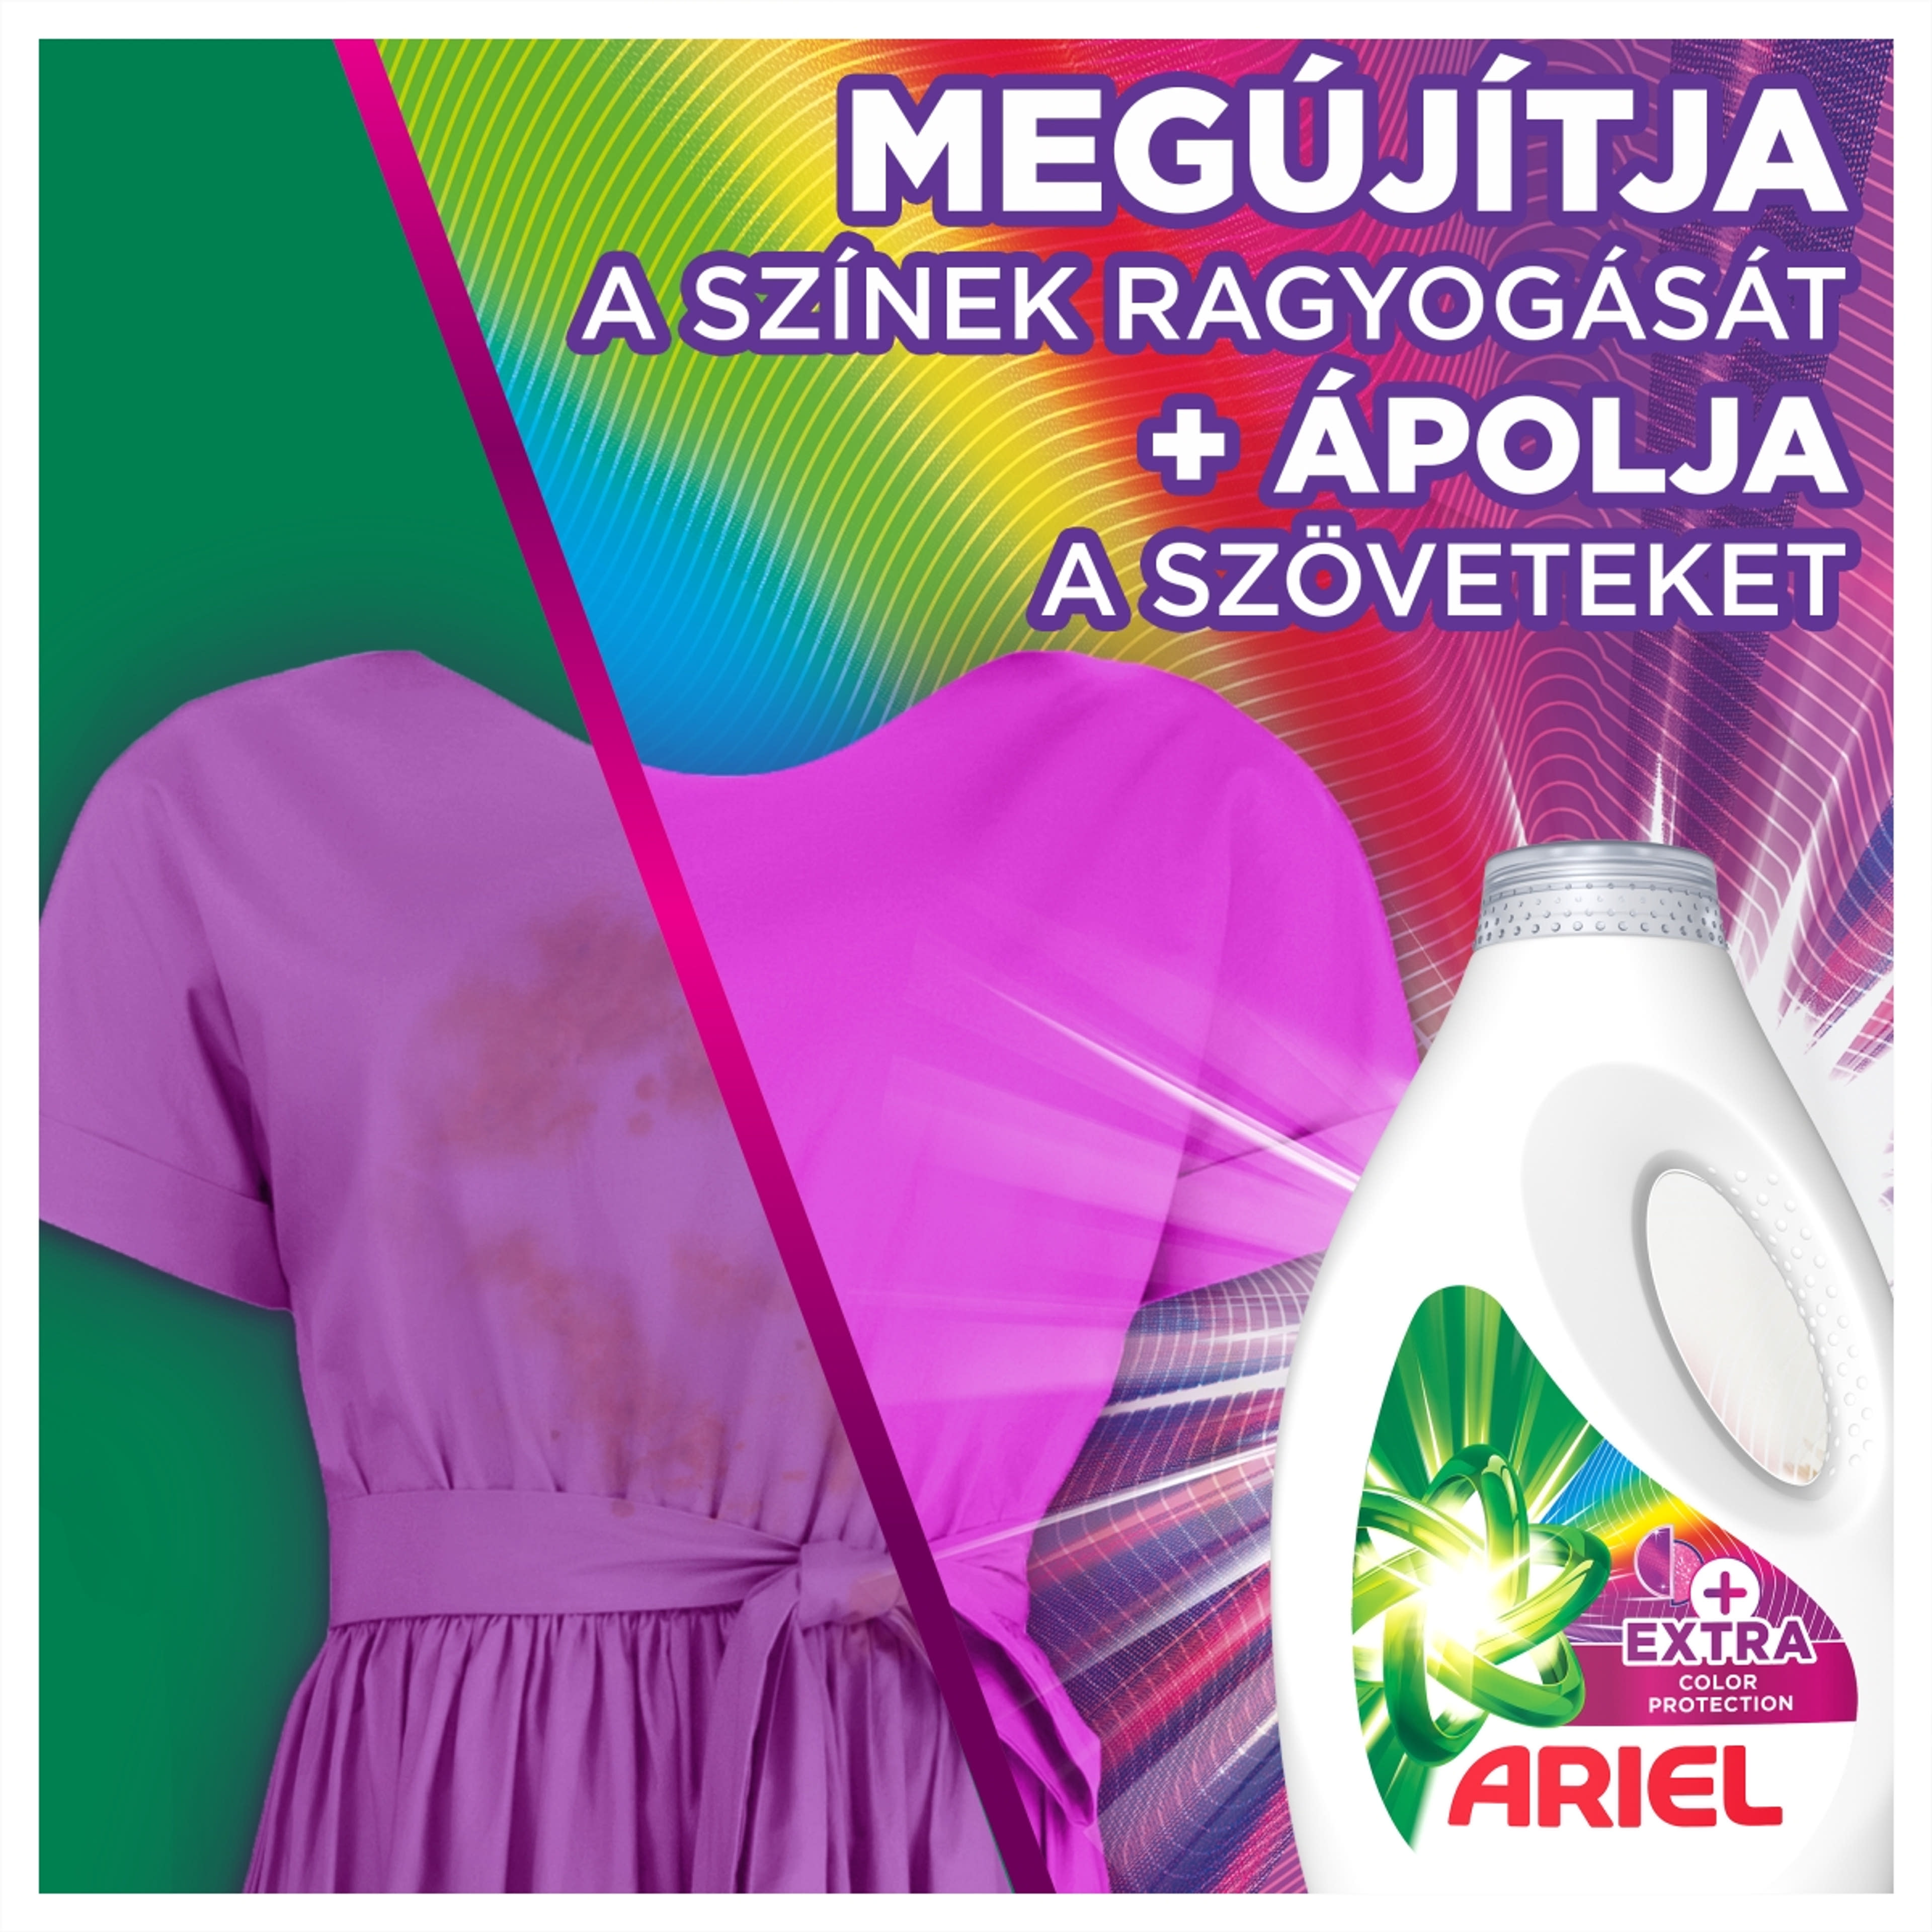 Ariel Complete Fiber Protection folyékony mosószer, 34 mosáshoz - 1700 ml-2